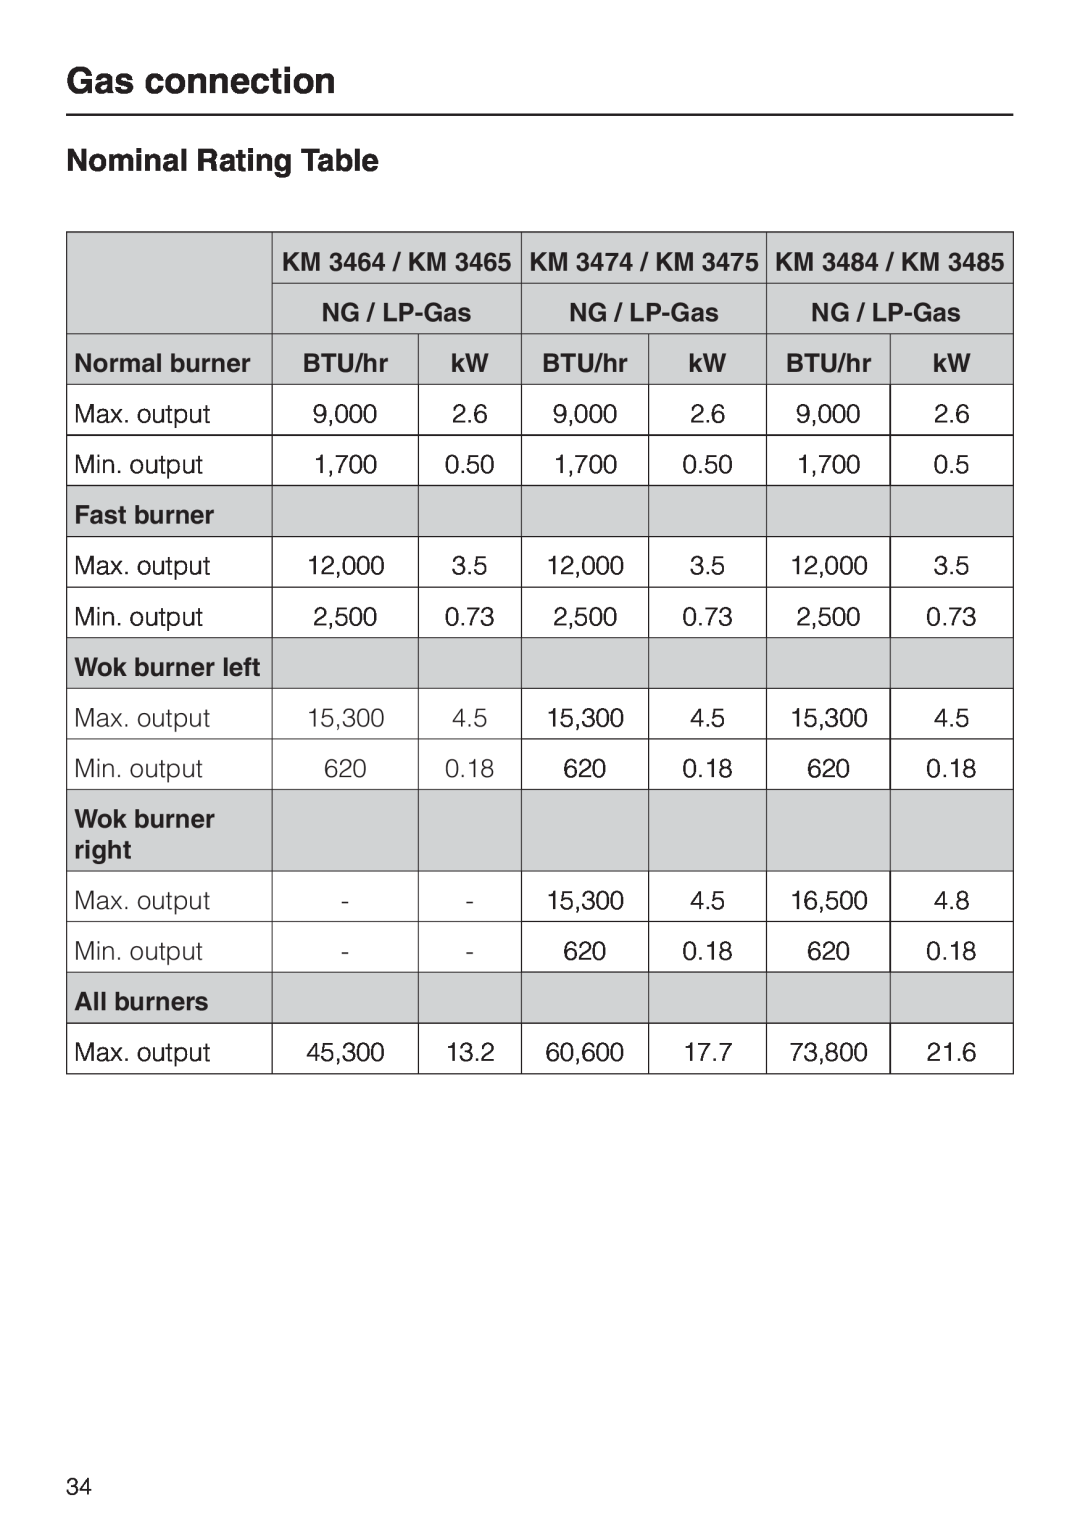 Miele KM 3485 Nominal Rating Table, KM 3464 / KM, KM 3474 / KM, KM 3484 / KM, NG / LP-Gas, Normal burner, BTU/hr, right 